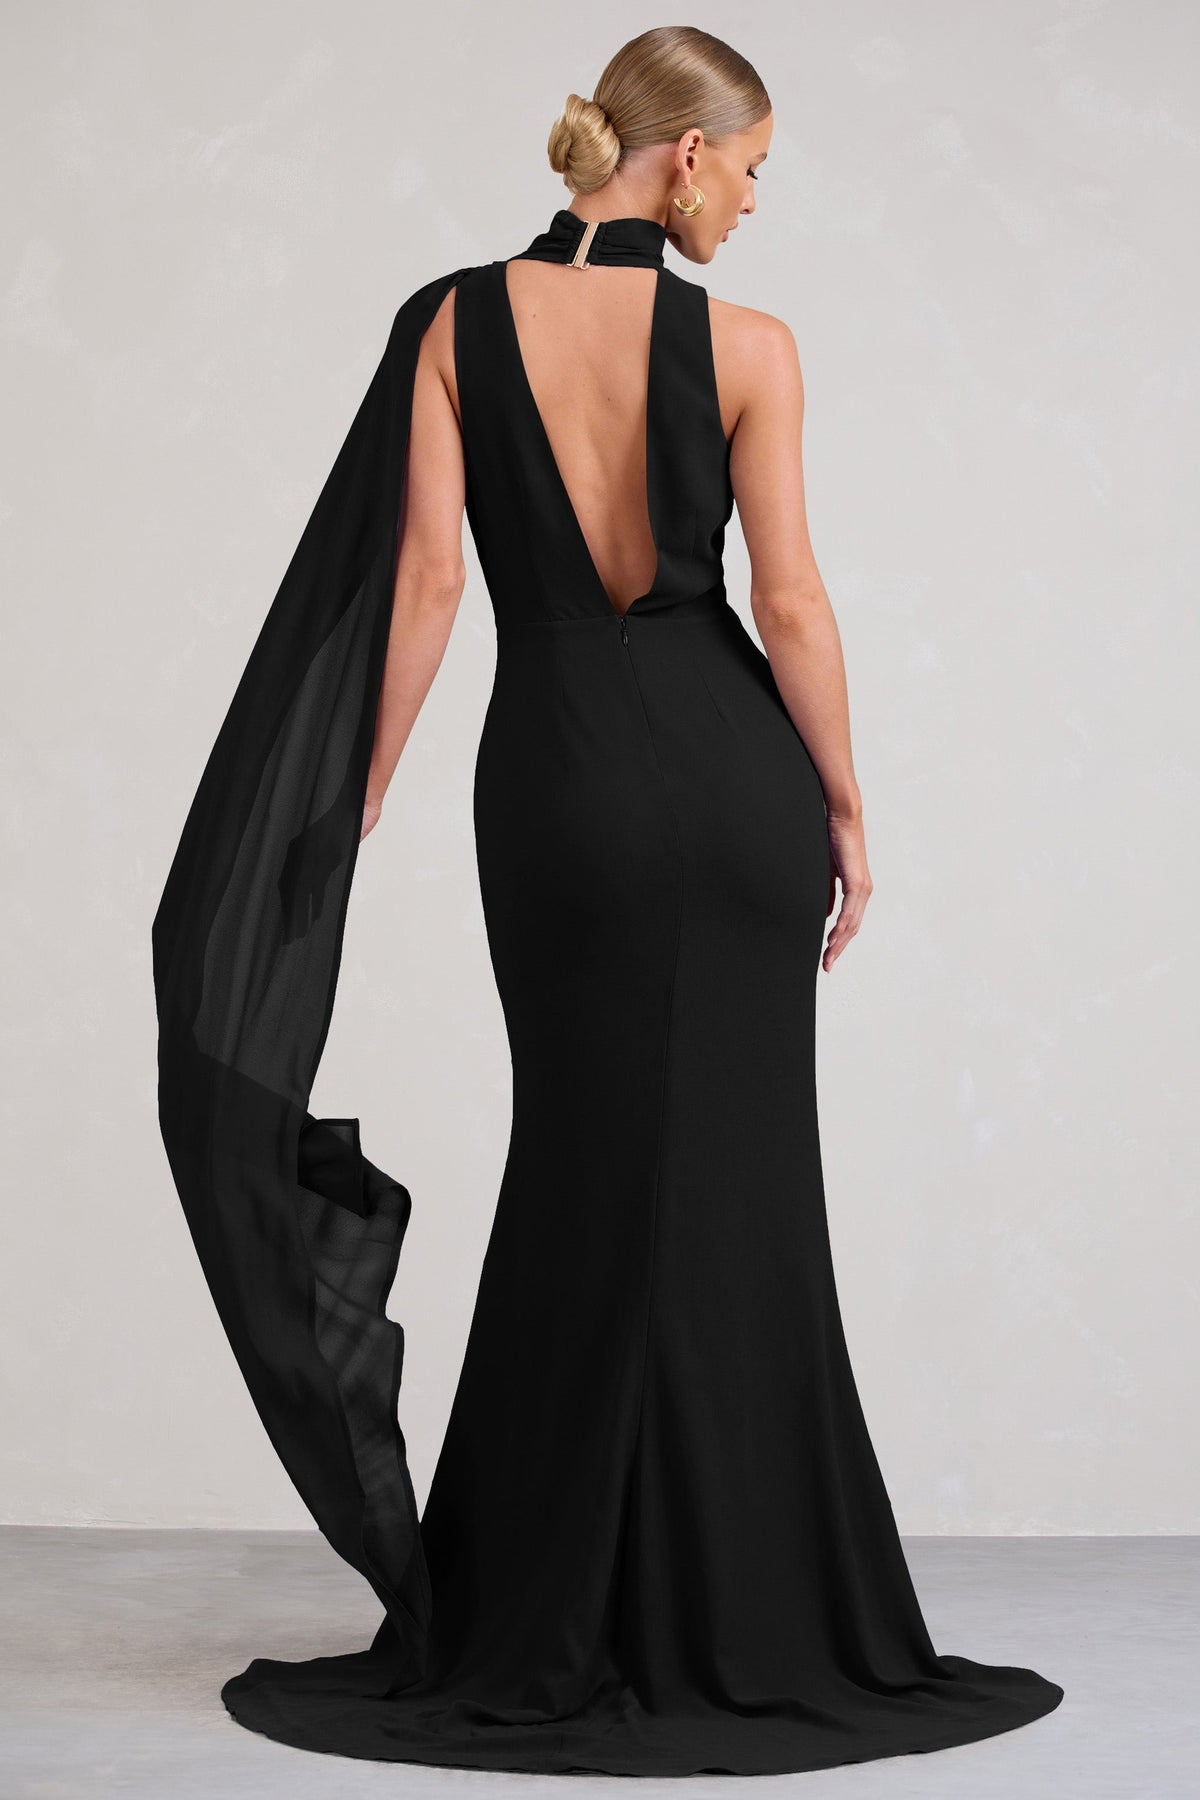 Lace-Bodice Long Black A-Line Prom Dress - PromGirl